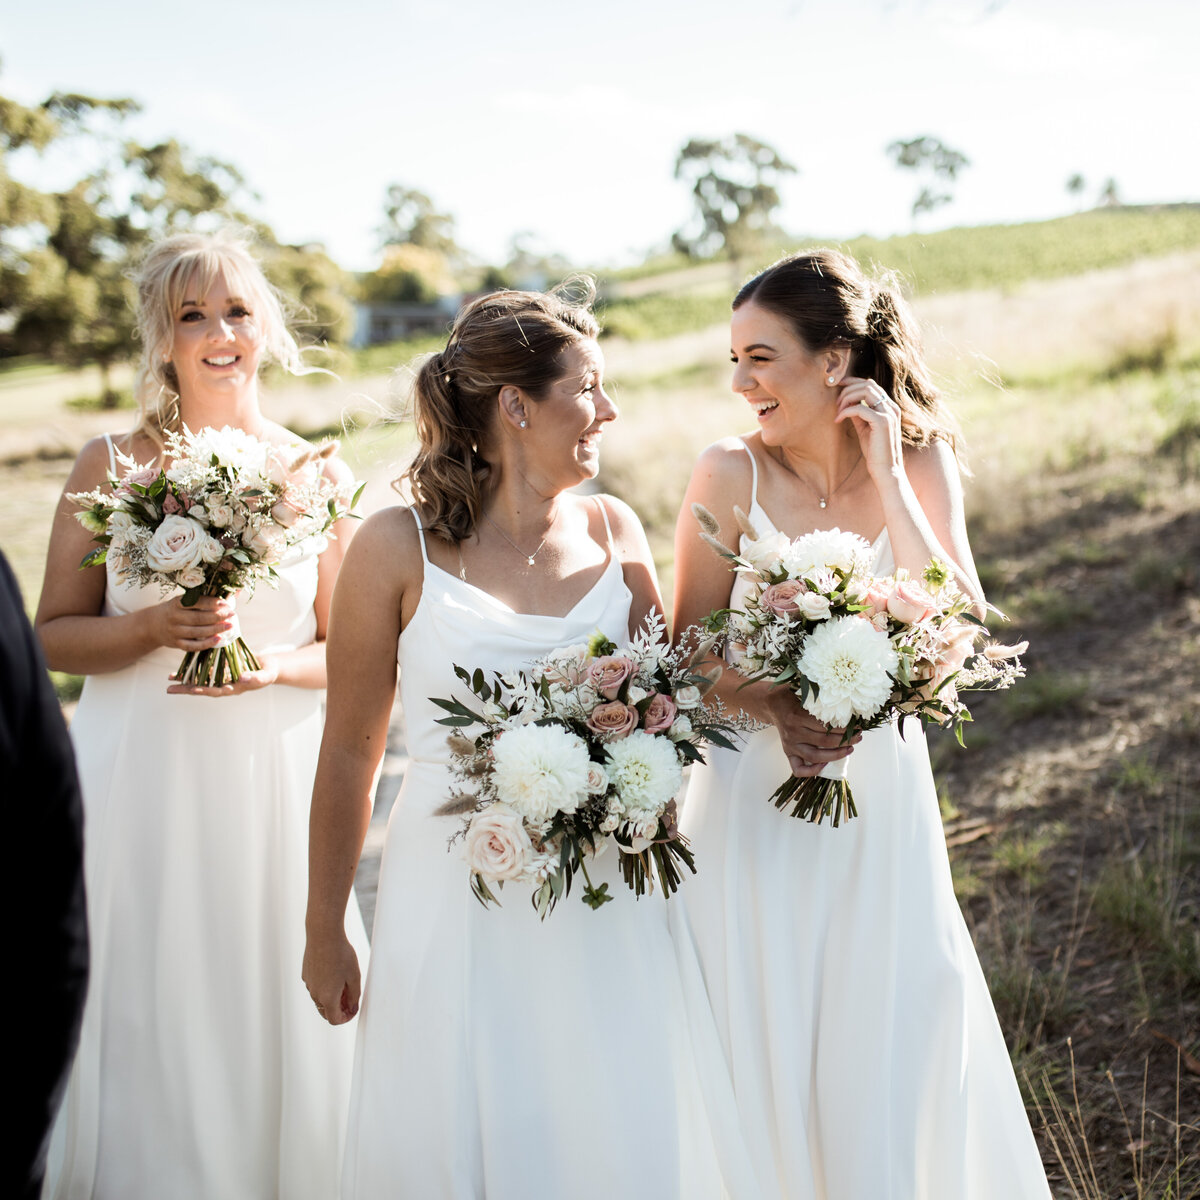 Sam-Scott-Rexvil-Photography-Adelaide-Wedding-Photographer-461